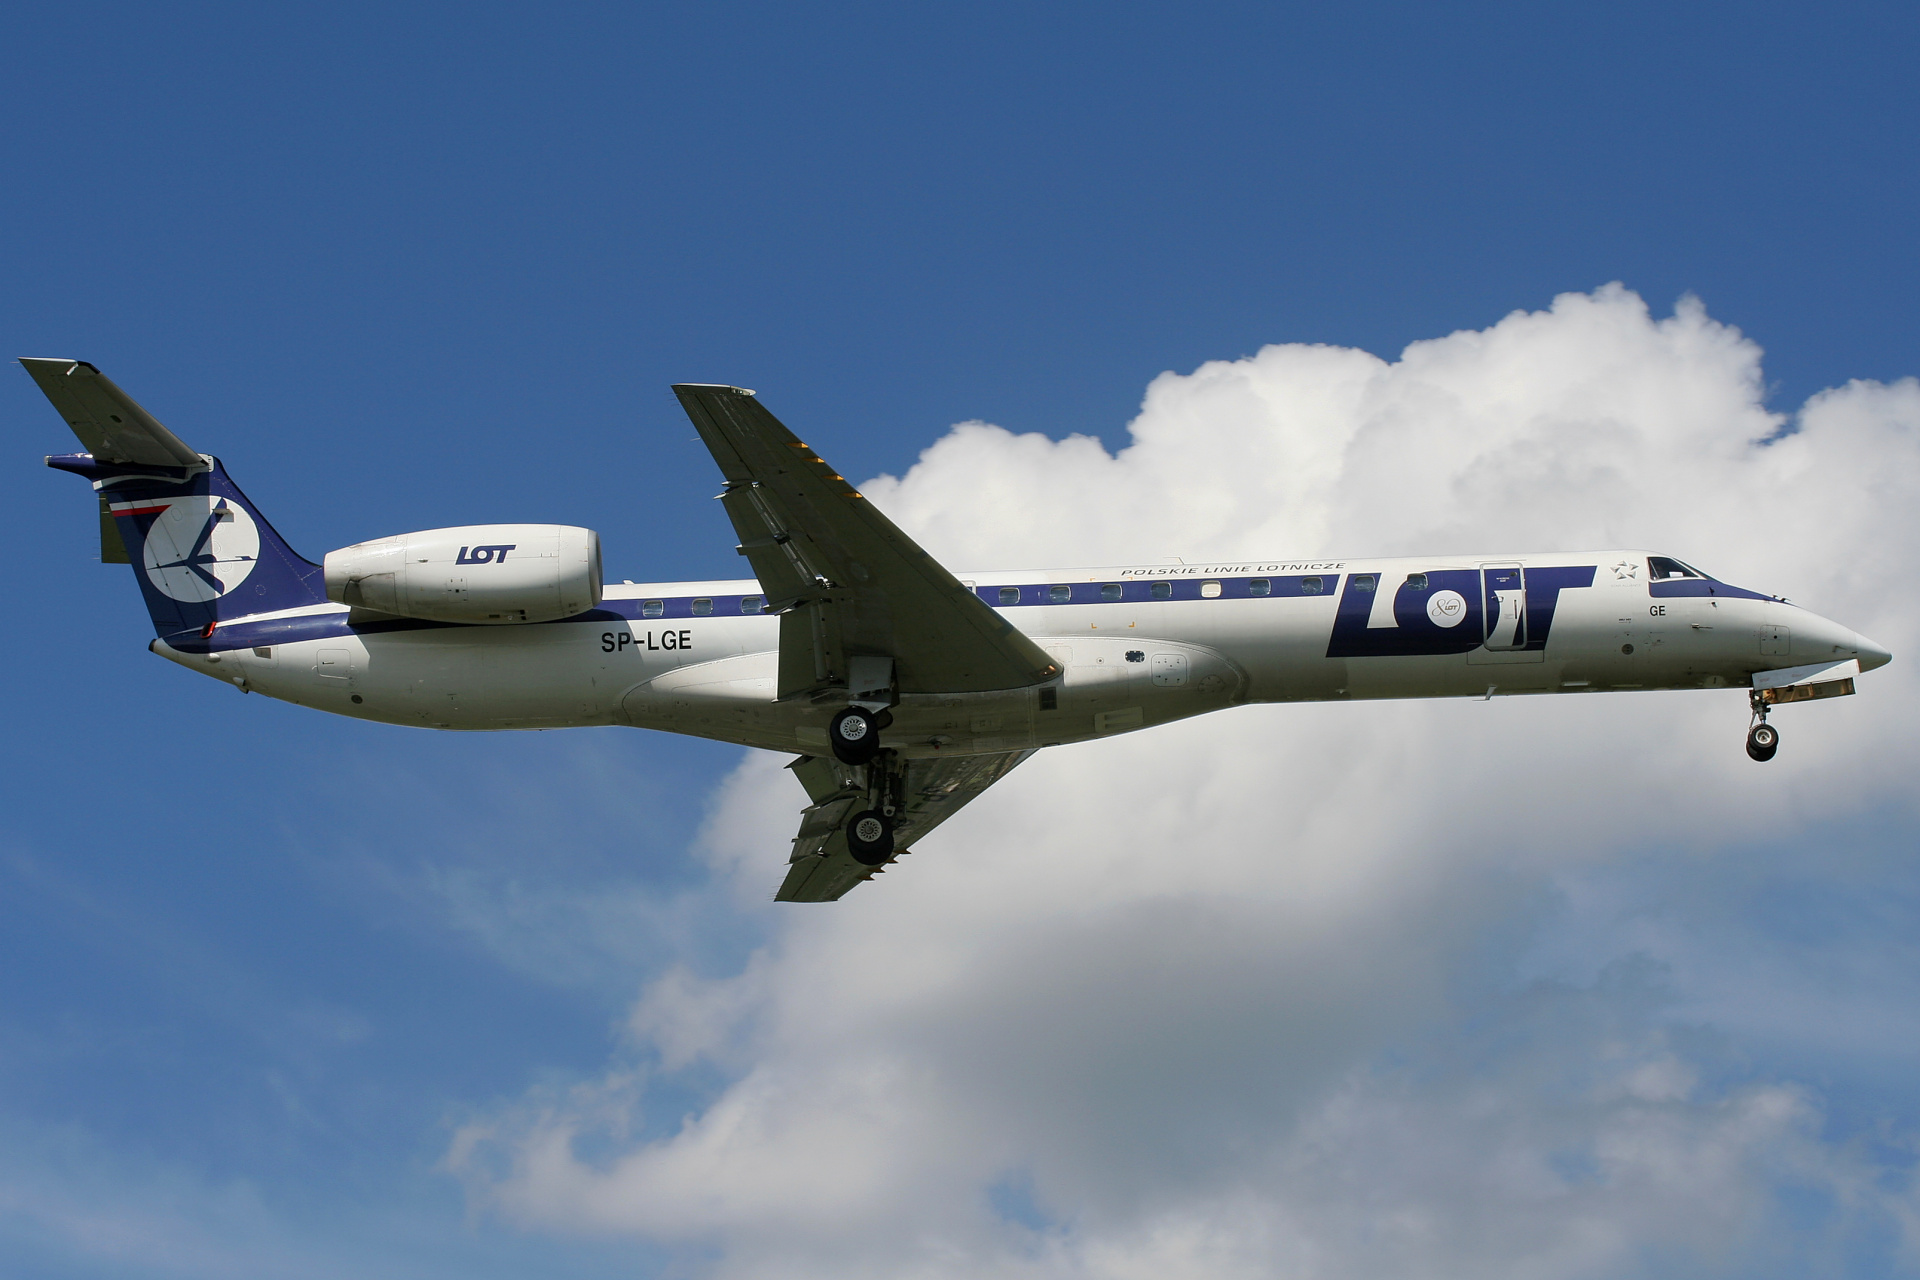 SP-LGE (80th Anniversary sticker) (Aircraft » EPWA Spotting » Embraer ERJ-145 » LOT Polish Airlines)